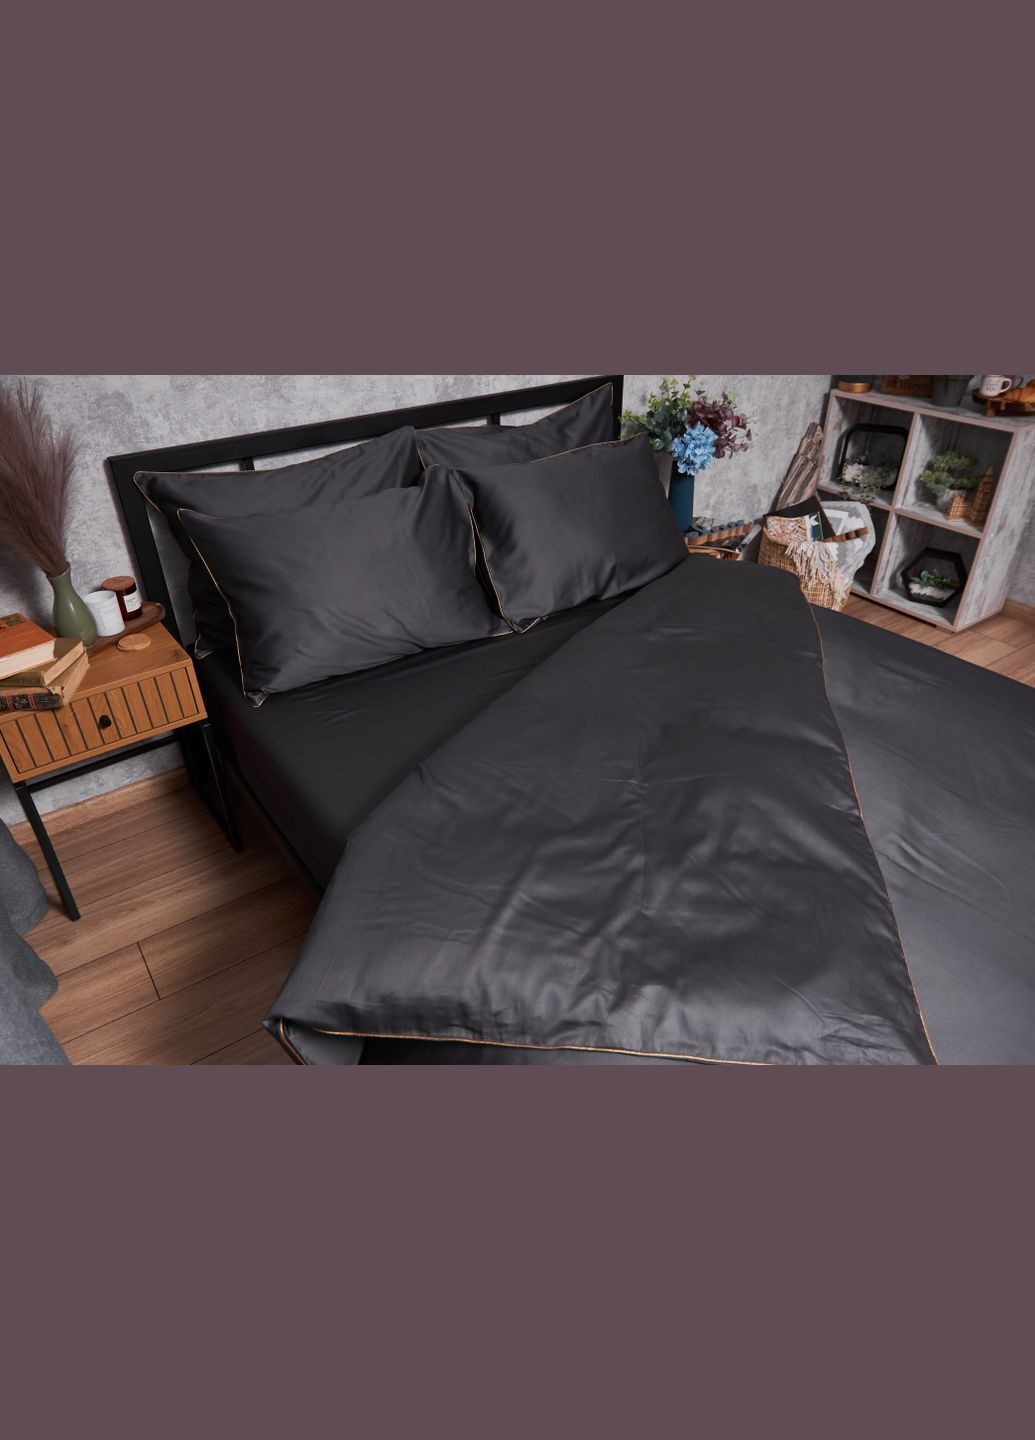 Комплект постельного белья Satin Premium полуторный евро 160х220 наволочки 2х70х70 (MS-820003907) Moon&Star gold corner (288043474)